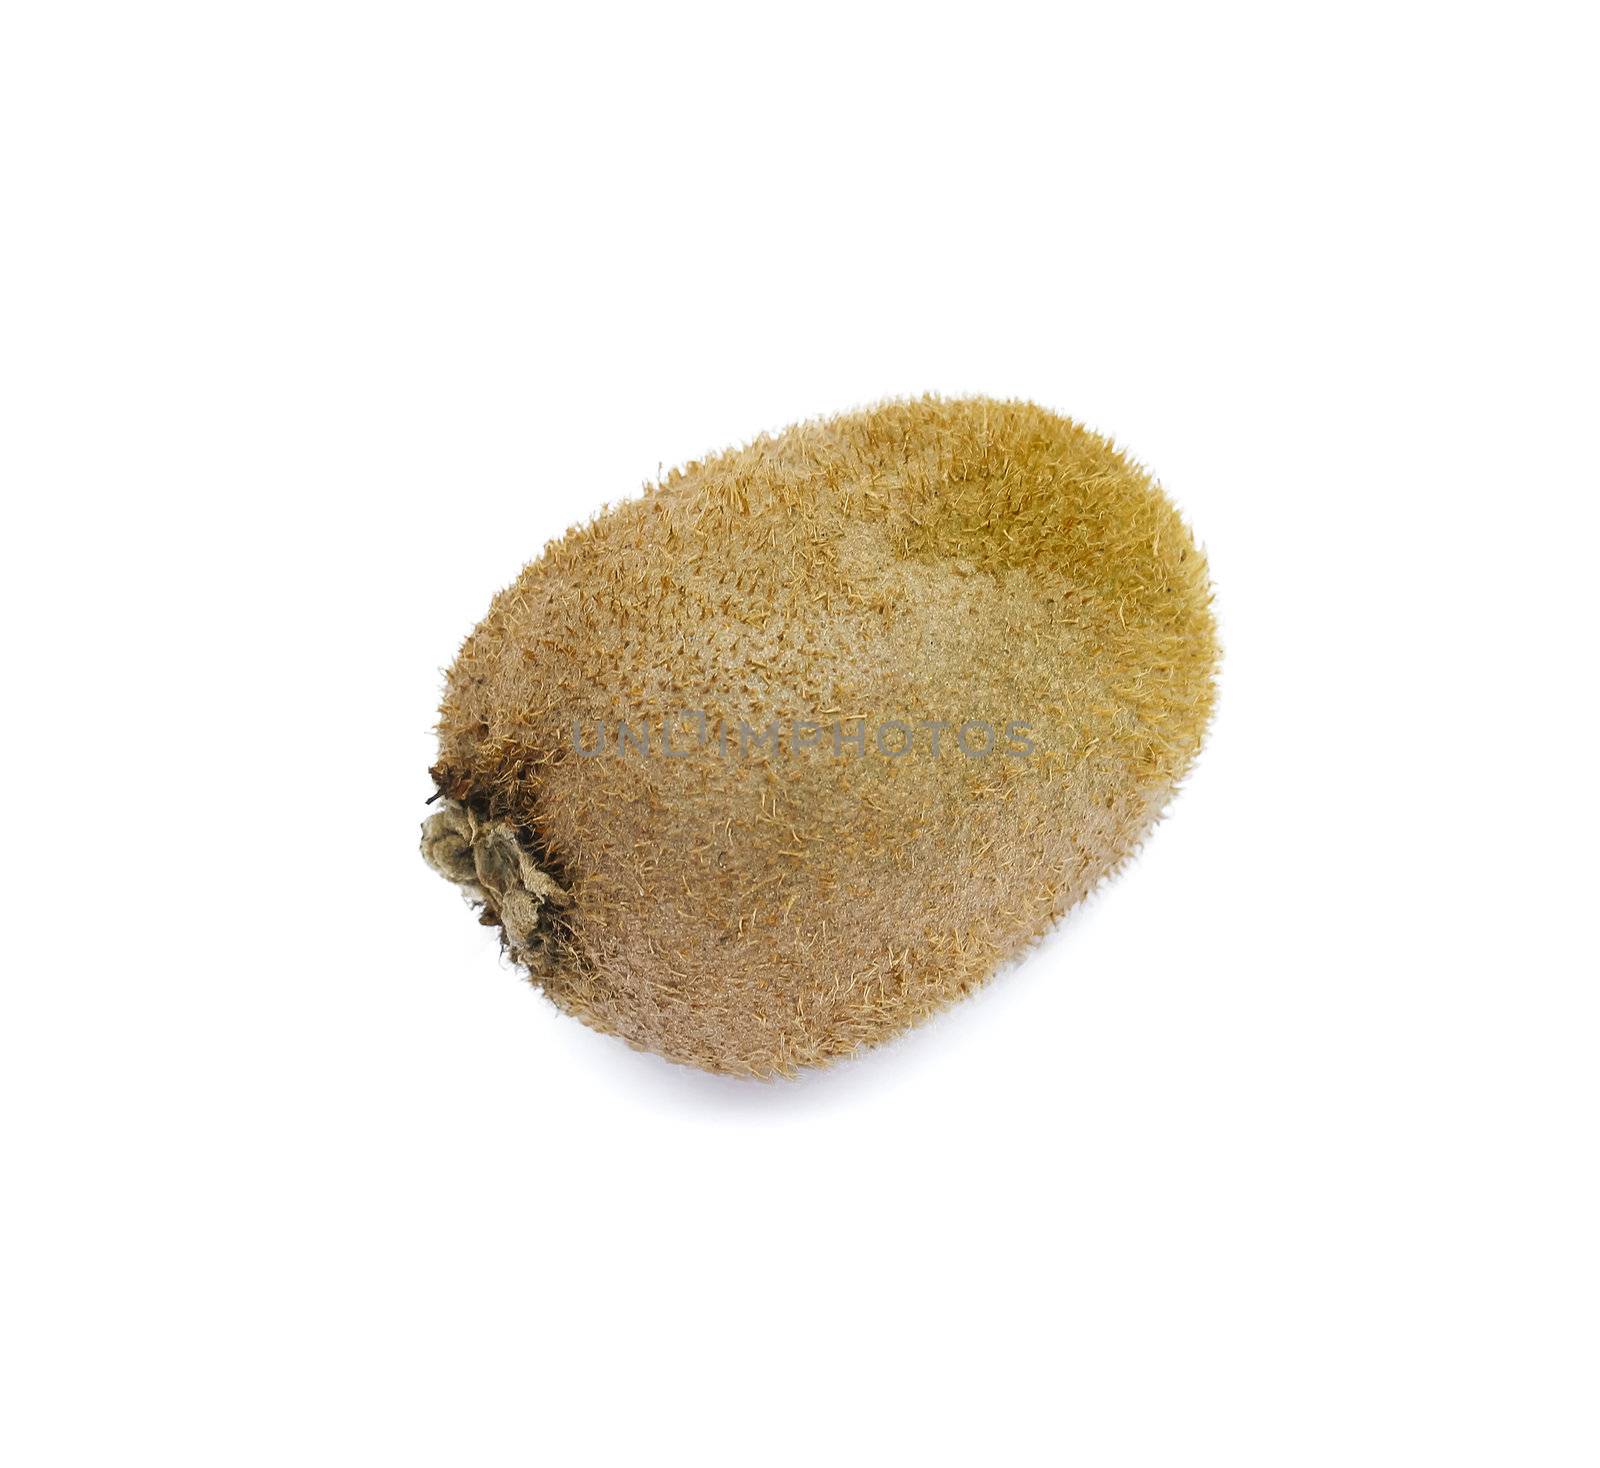 One kiwi fruit on a white background by NickNick